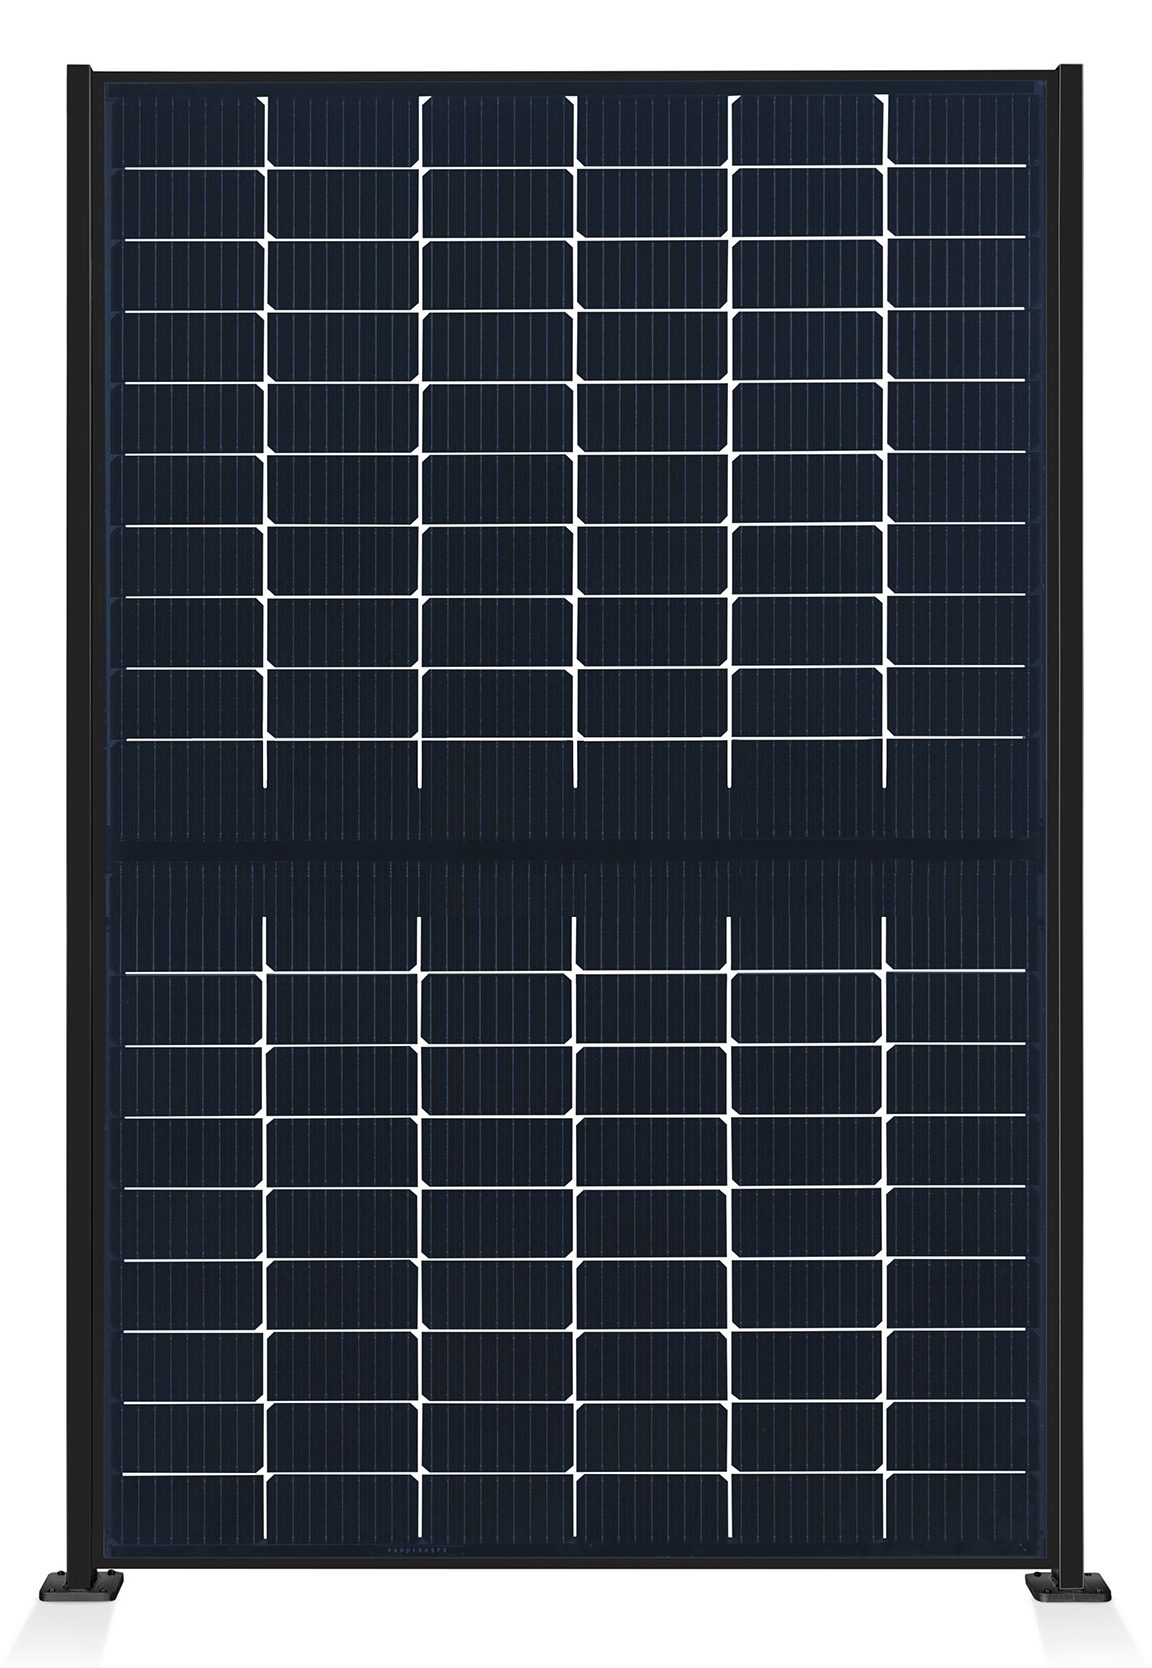 ausschnitt_0021_element-solar-sichtschutz-pv-photovoltaik-zaun-collection-hutter-panel-transparent-pfosten-schwarz-front